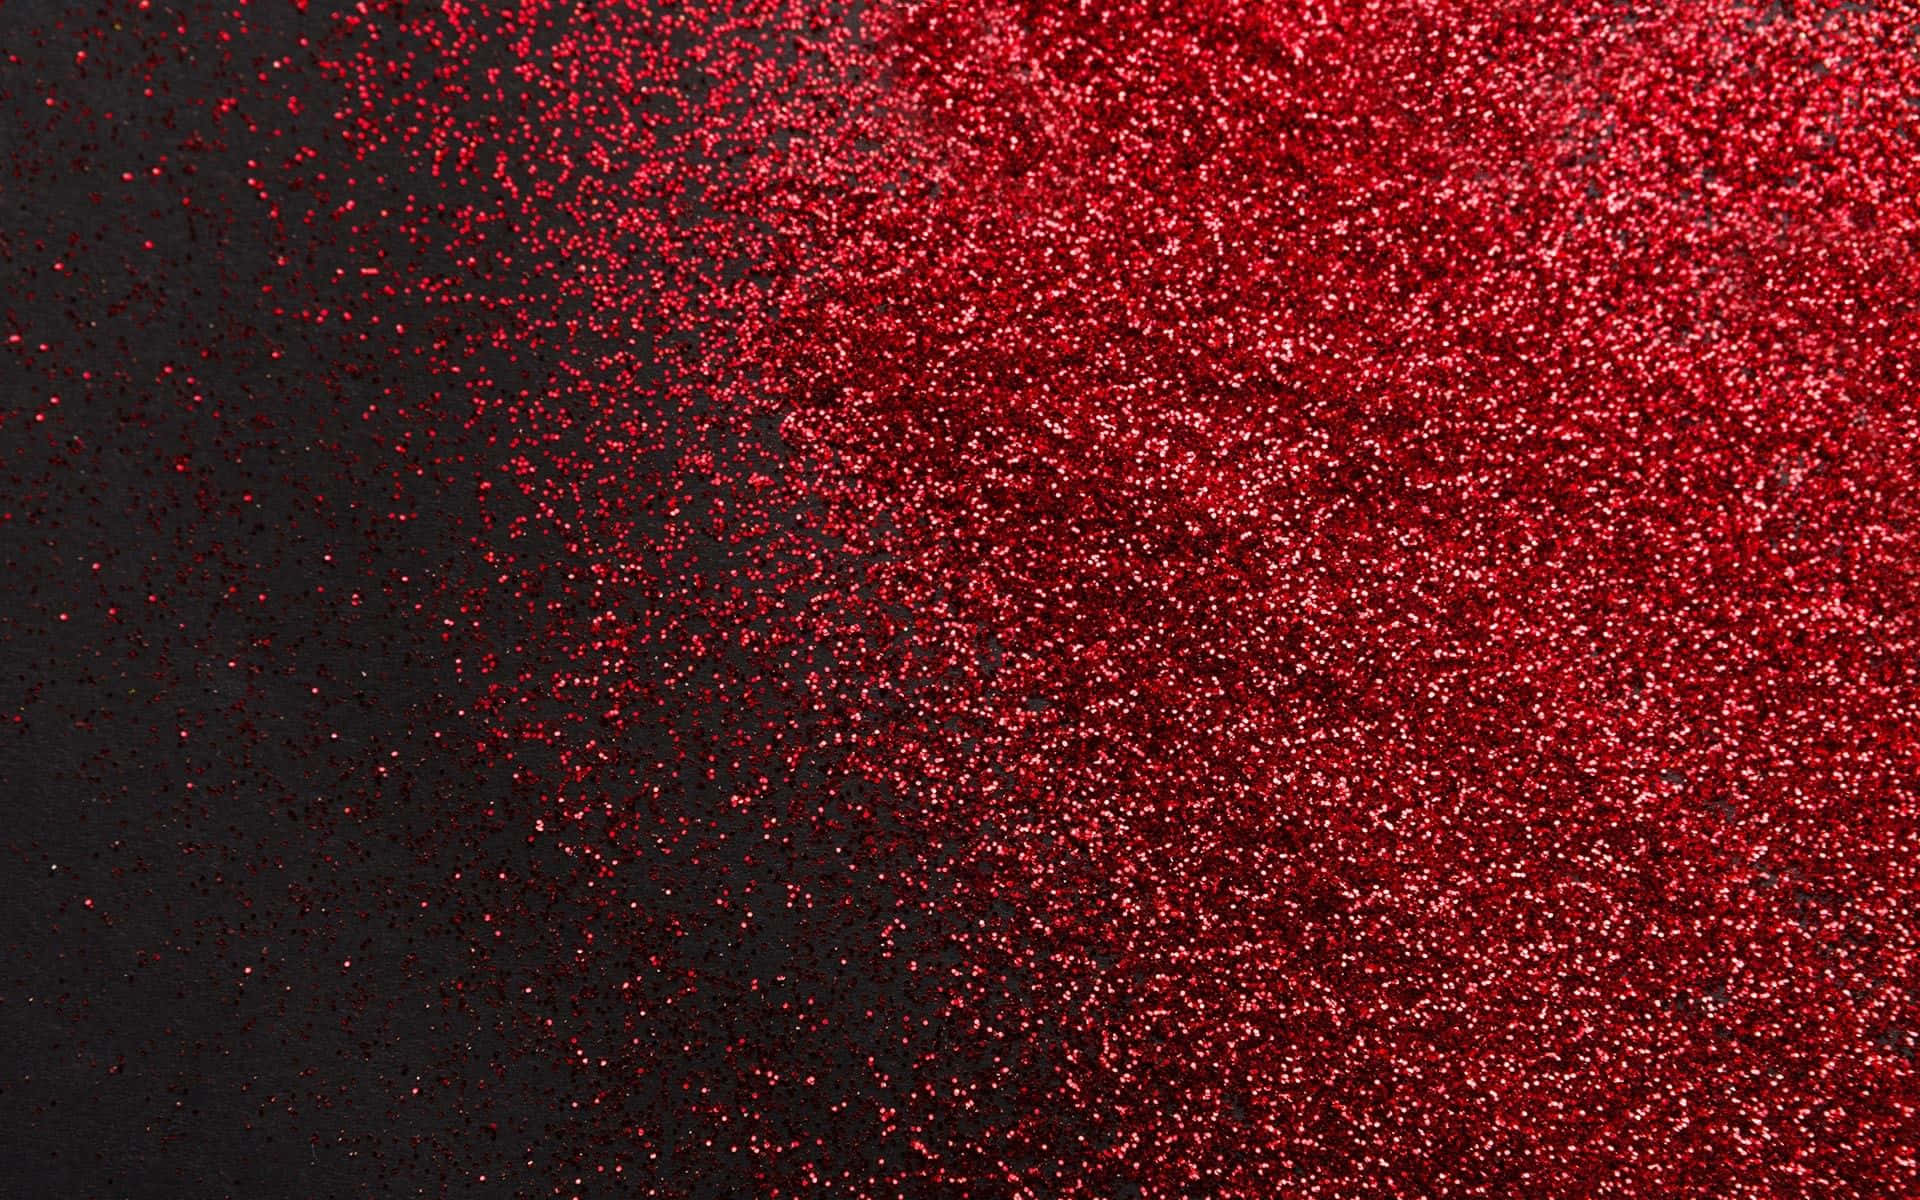 Red Black Glitter Wallpaper Images  Free Download on Freepik